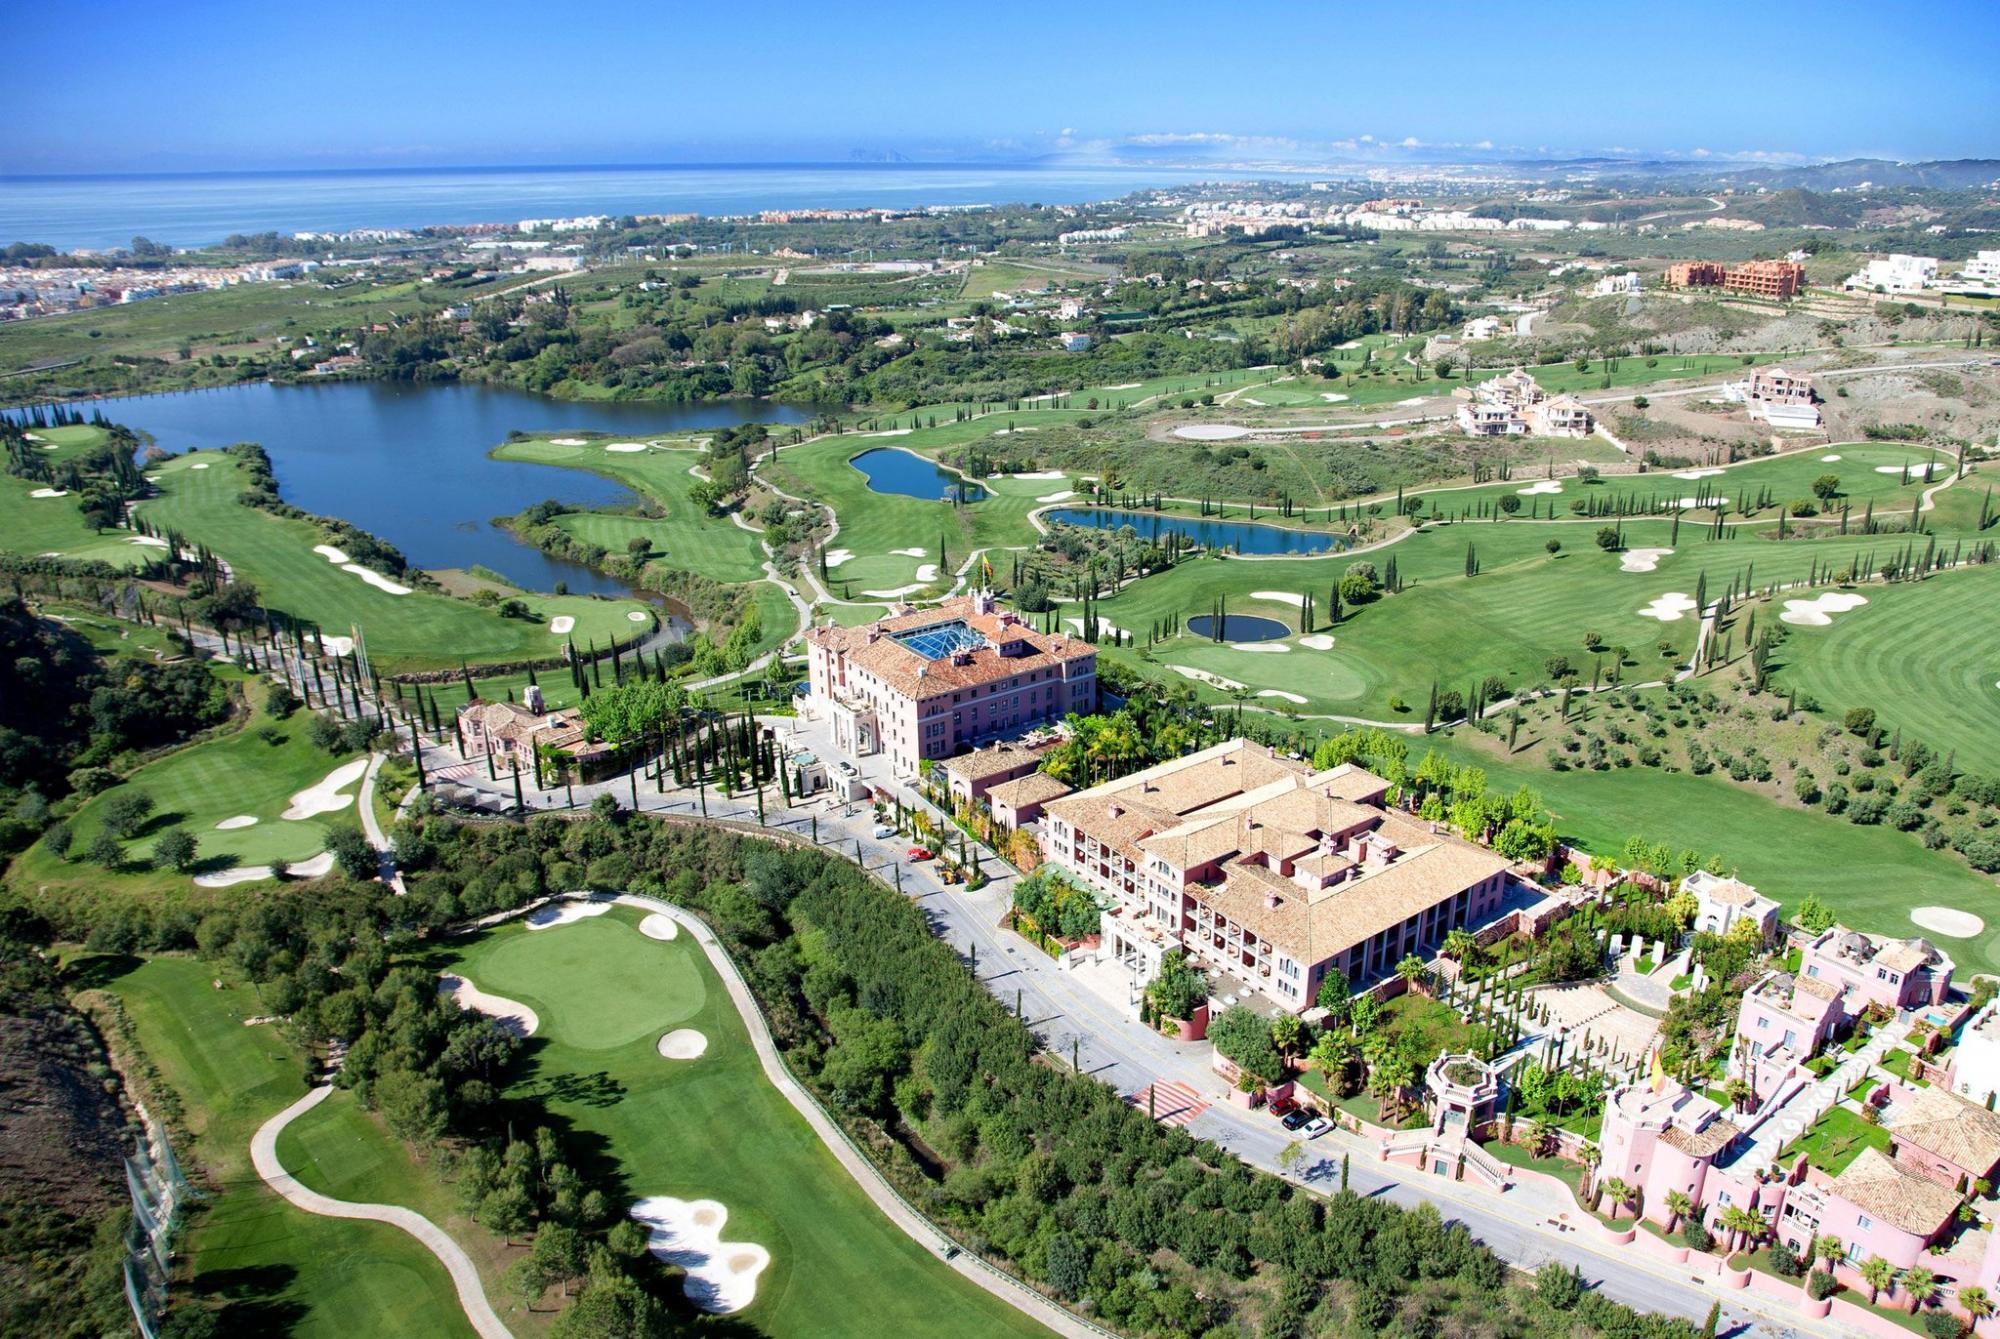 The Flamingos Course - Villa Padierna's picturesque golf course situated in impressive Costa Del Sol